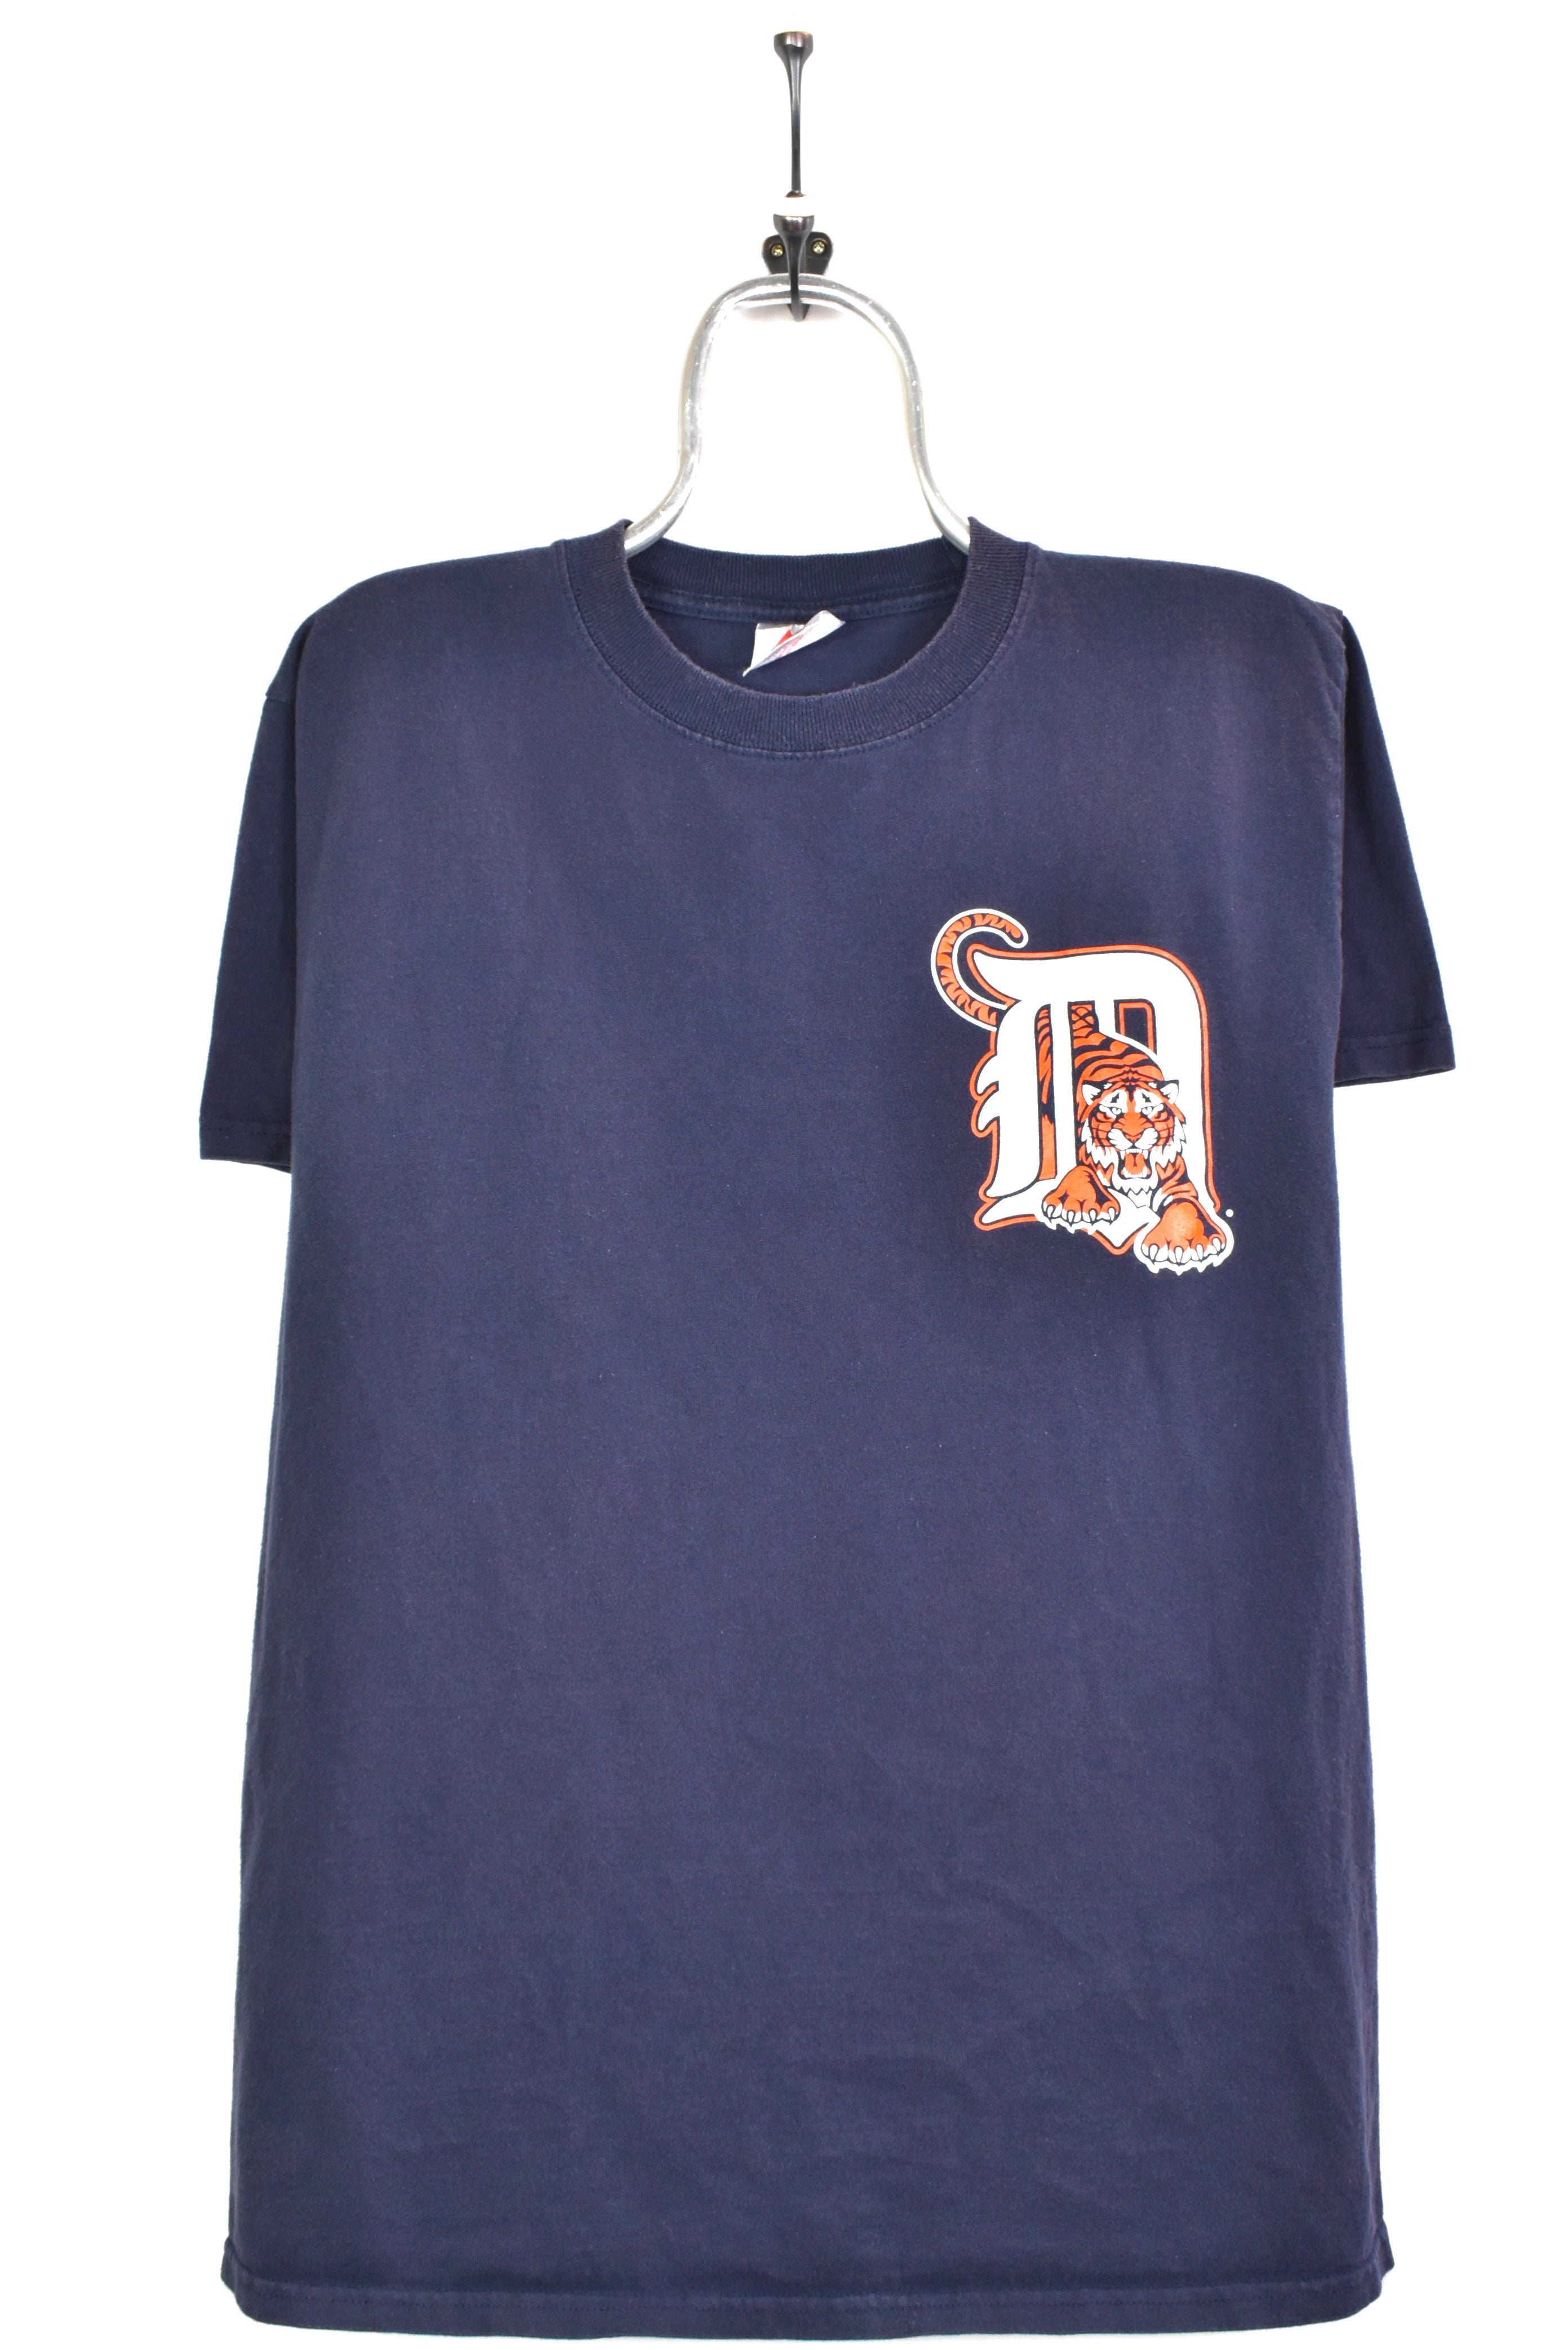 Vintage Detroit Tigers shirt, MLB short sleeve graphic tee - medium, navy  blue